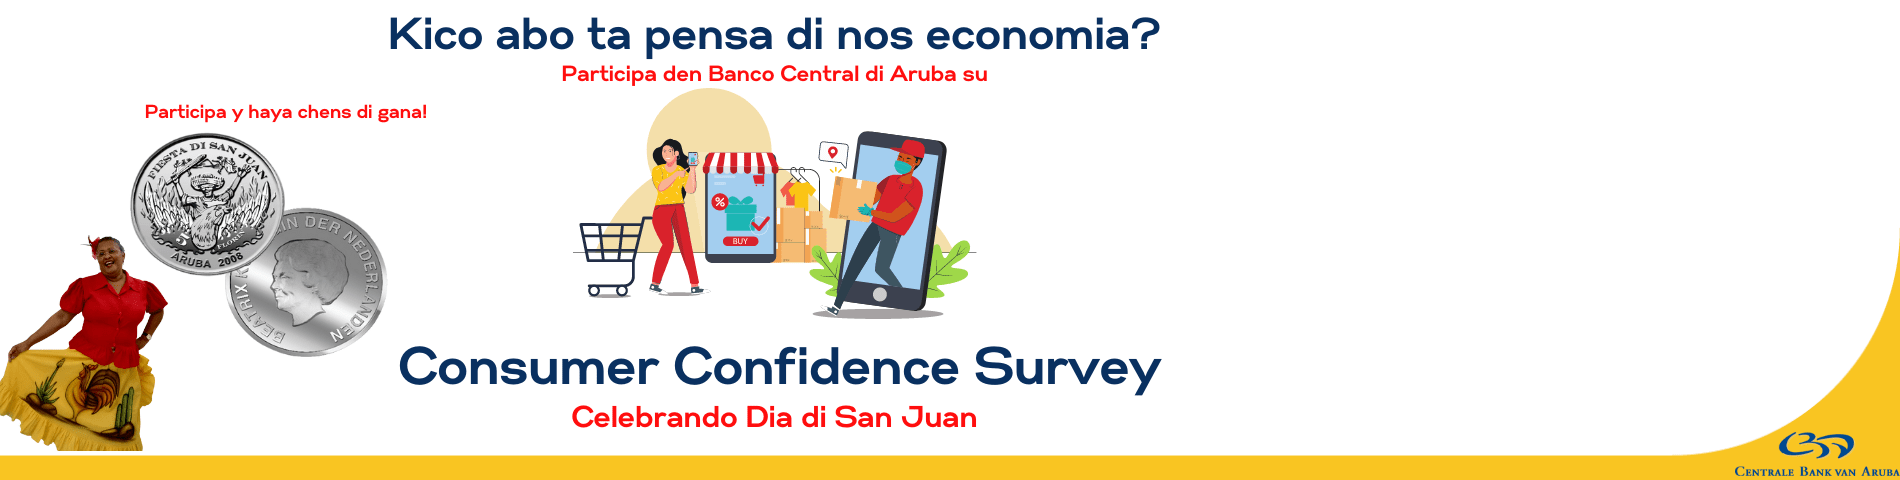 Consumer Confidence Survey